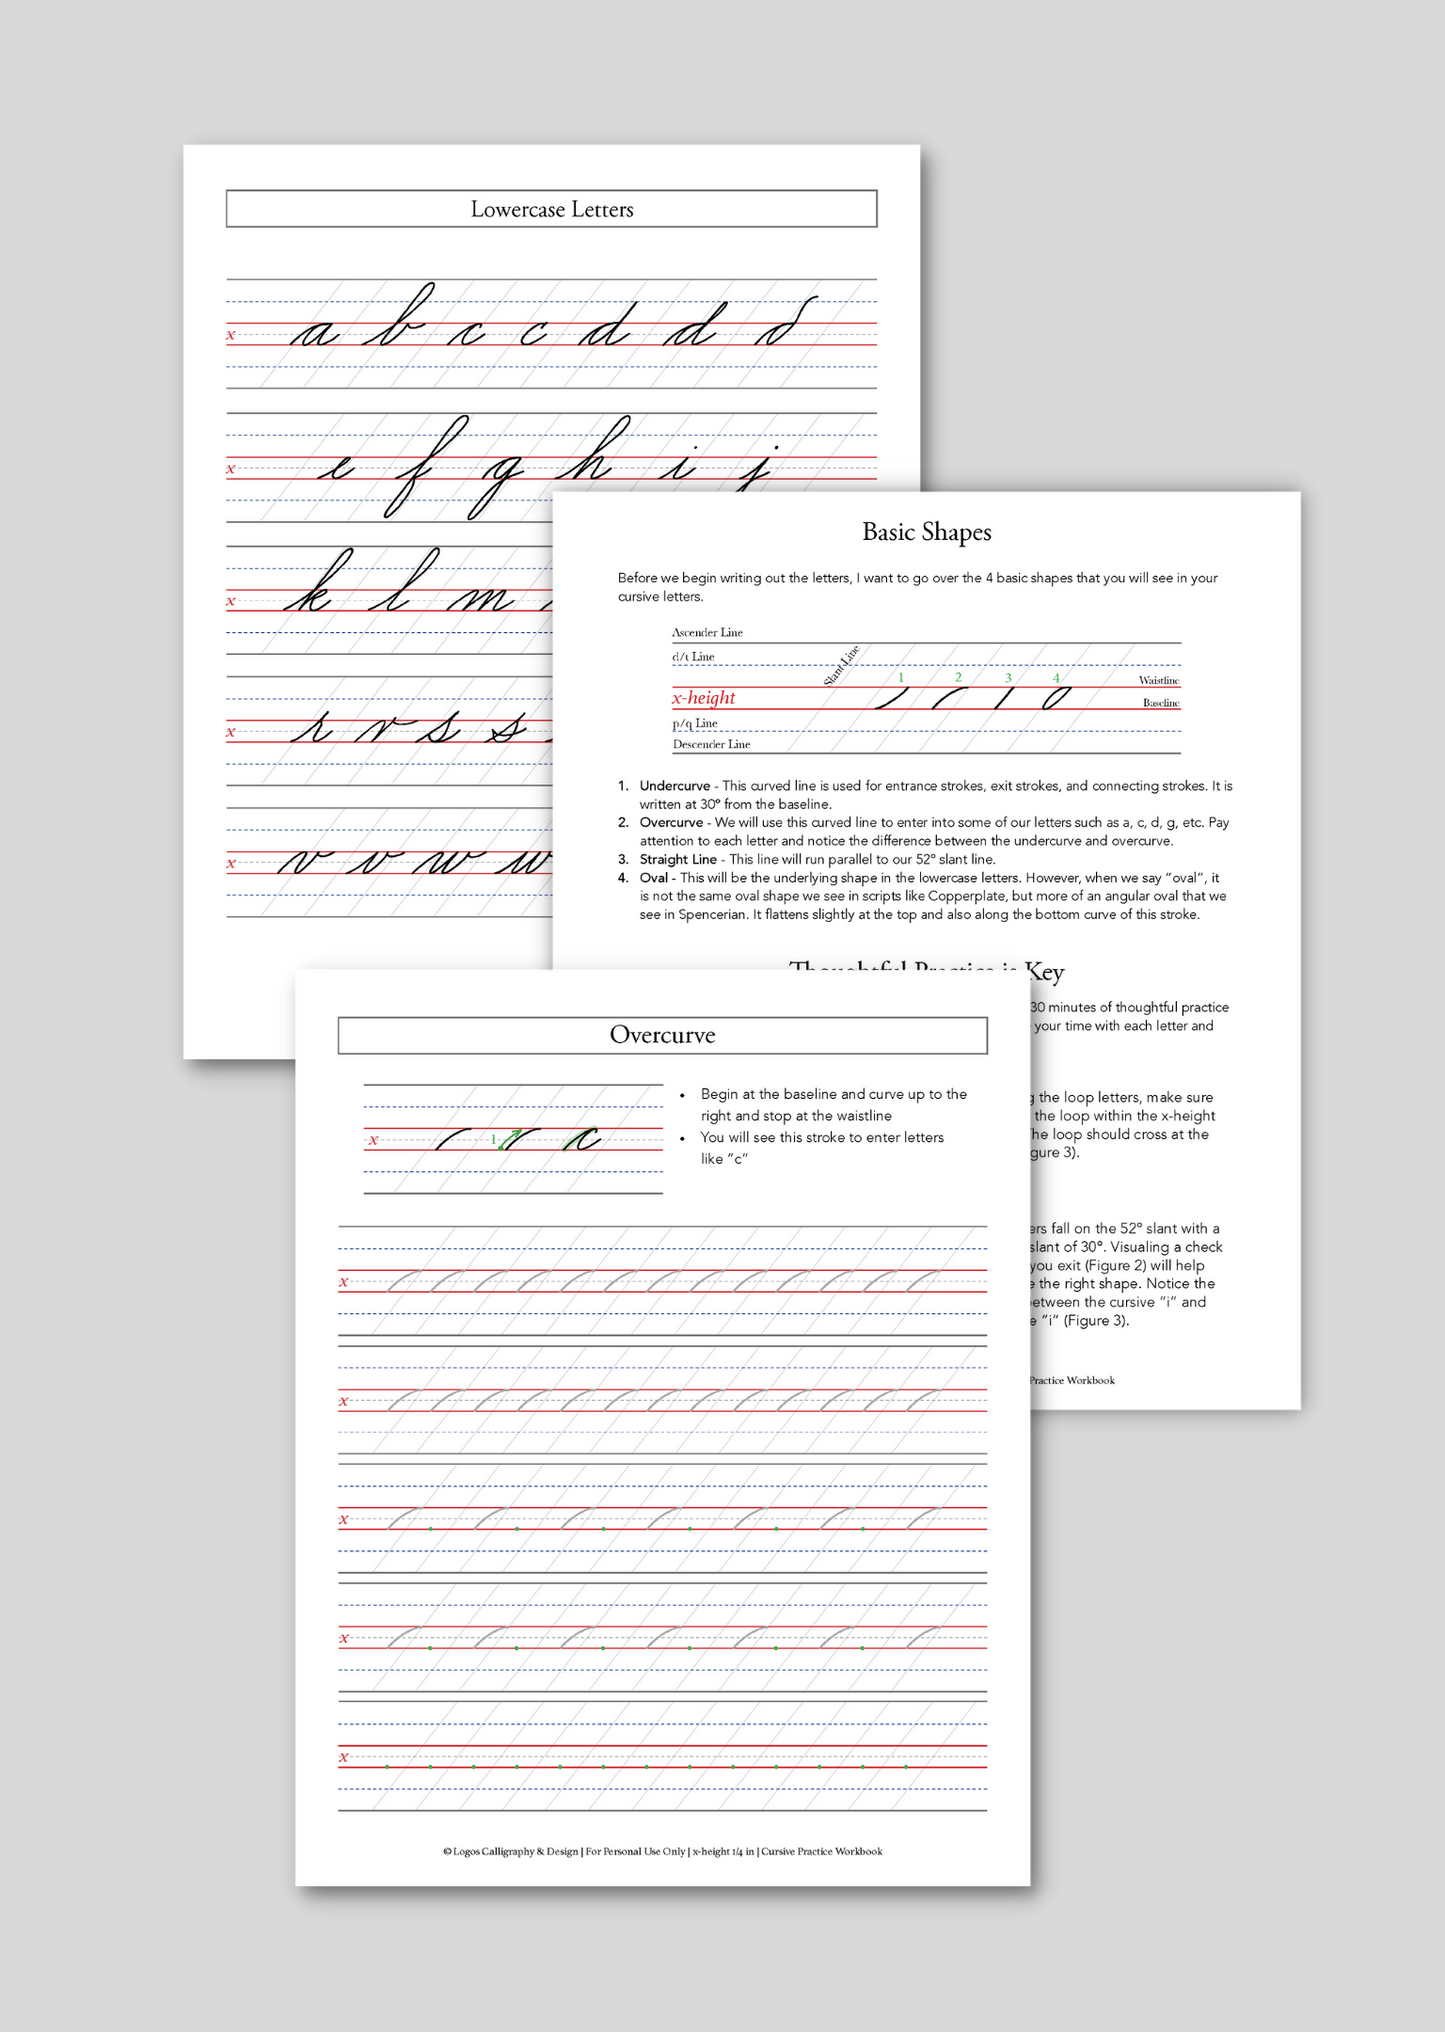 Digital Cursive Practice Workbook - Lowercase Letters